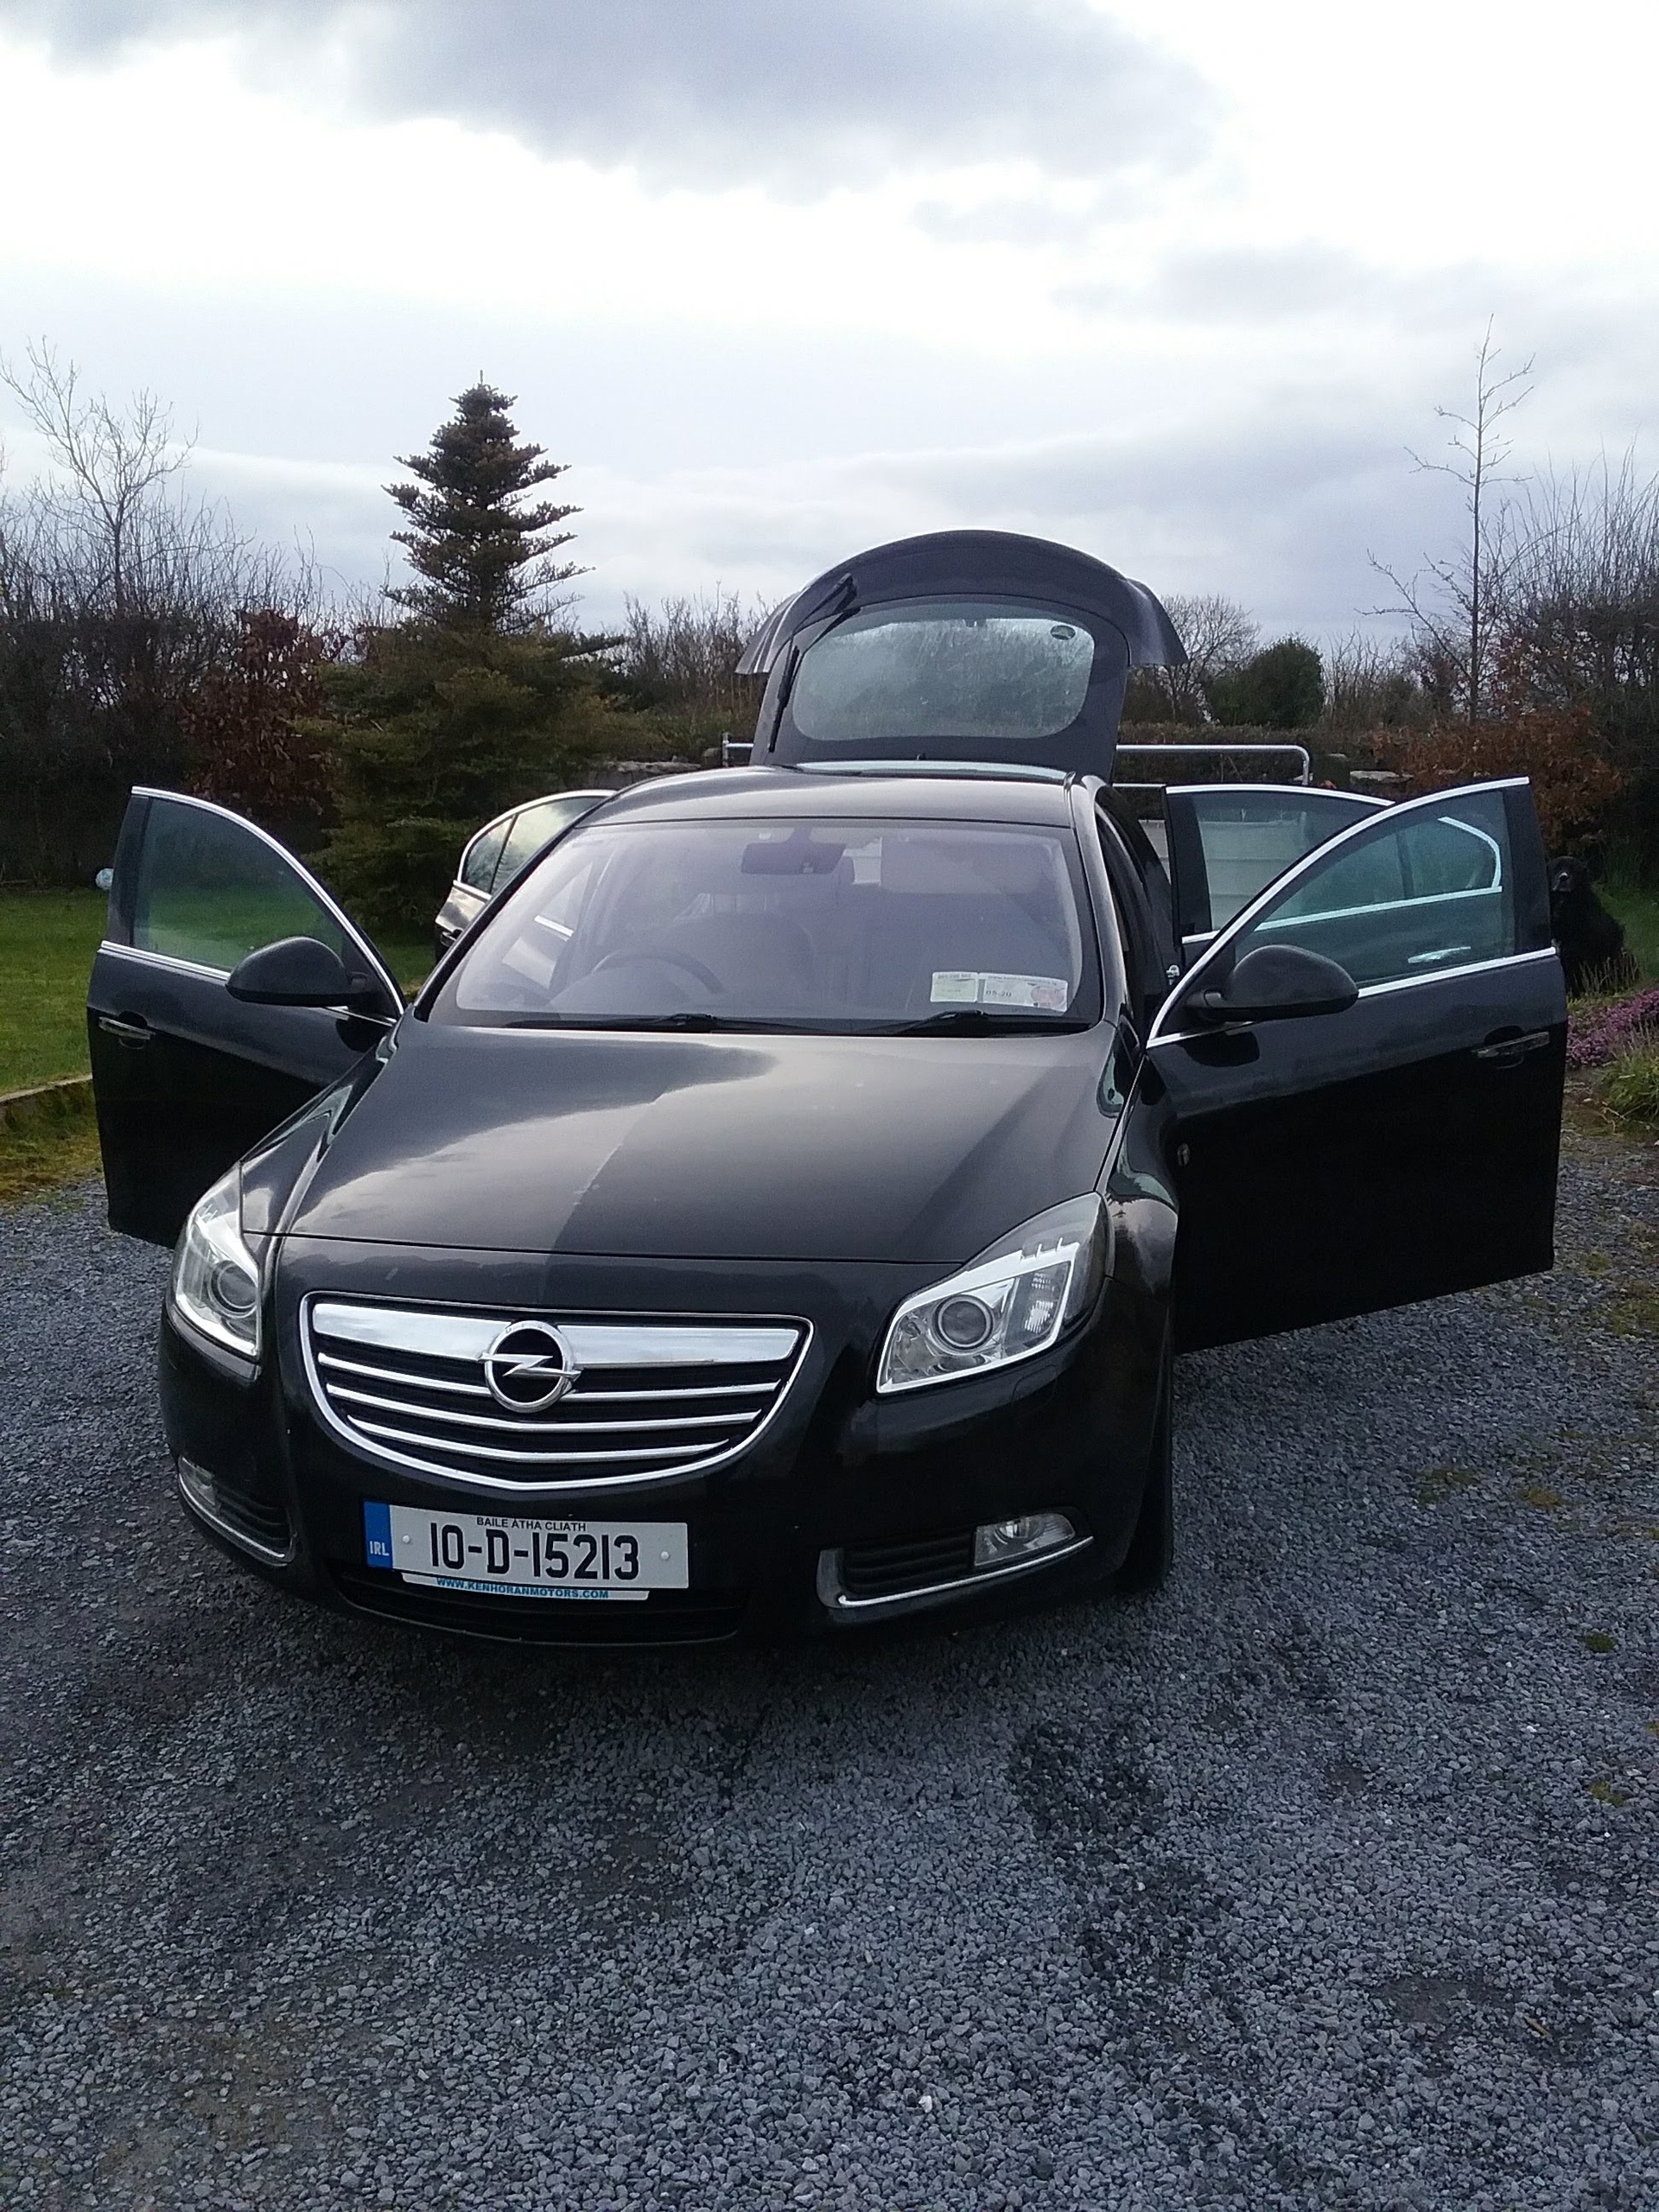 Used Opel Insignia Elite 2010 in Galway